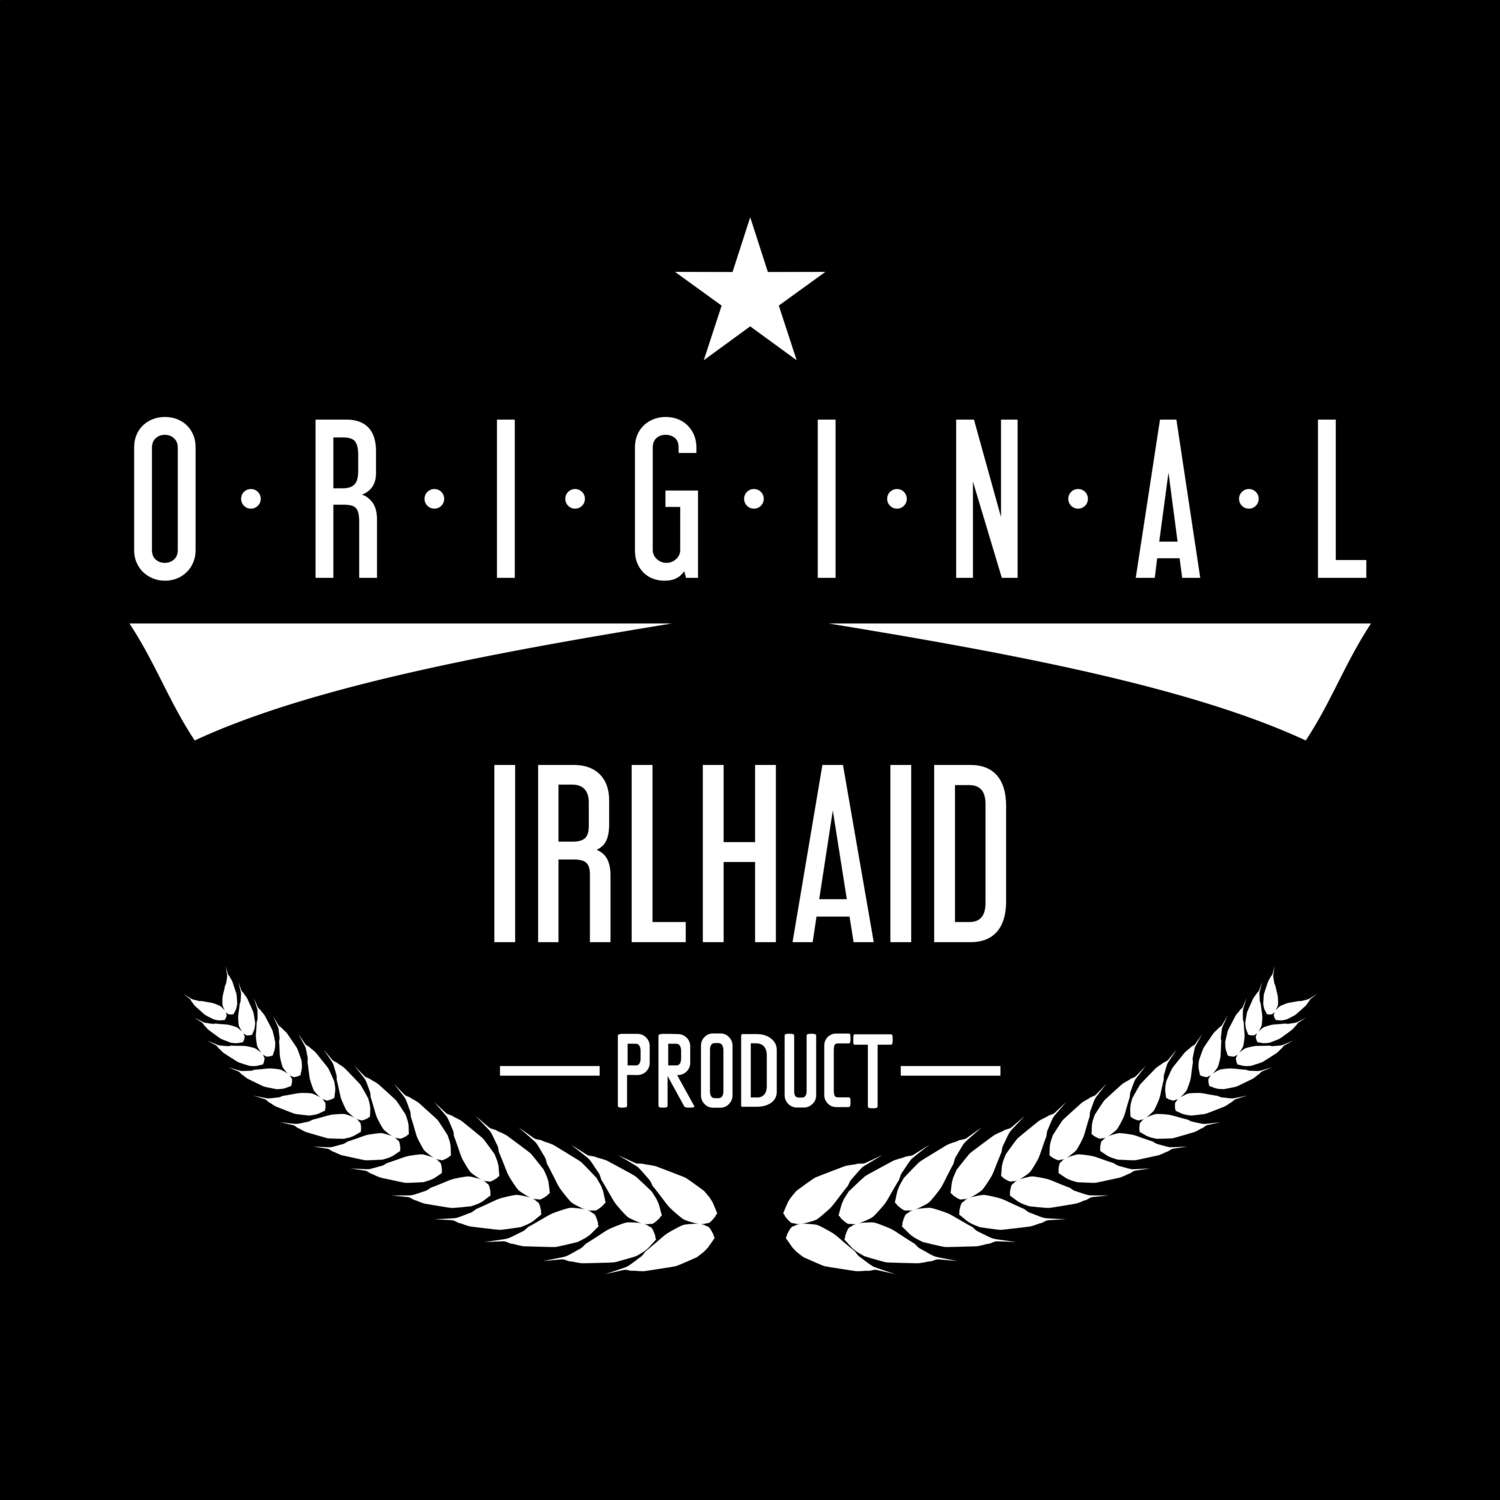 Irlhaid T-Shirt »Original Product«